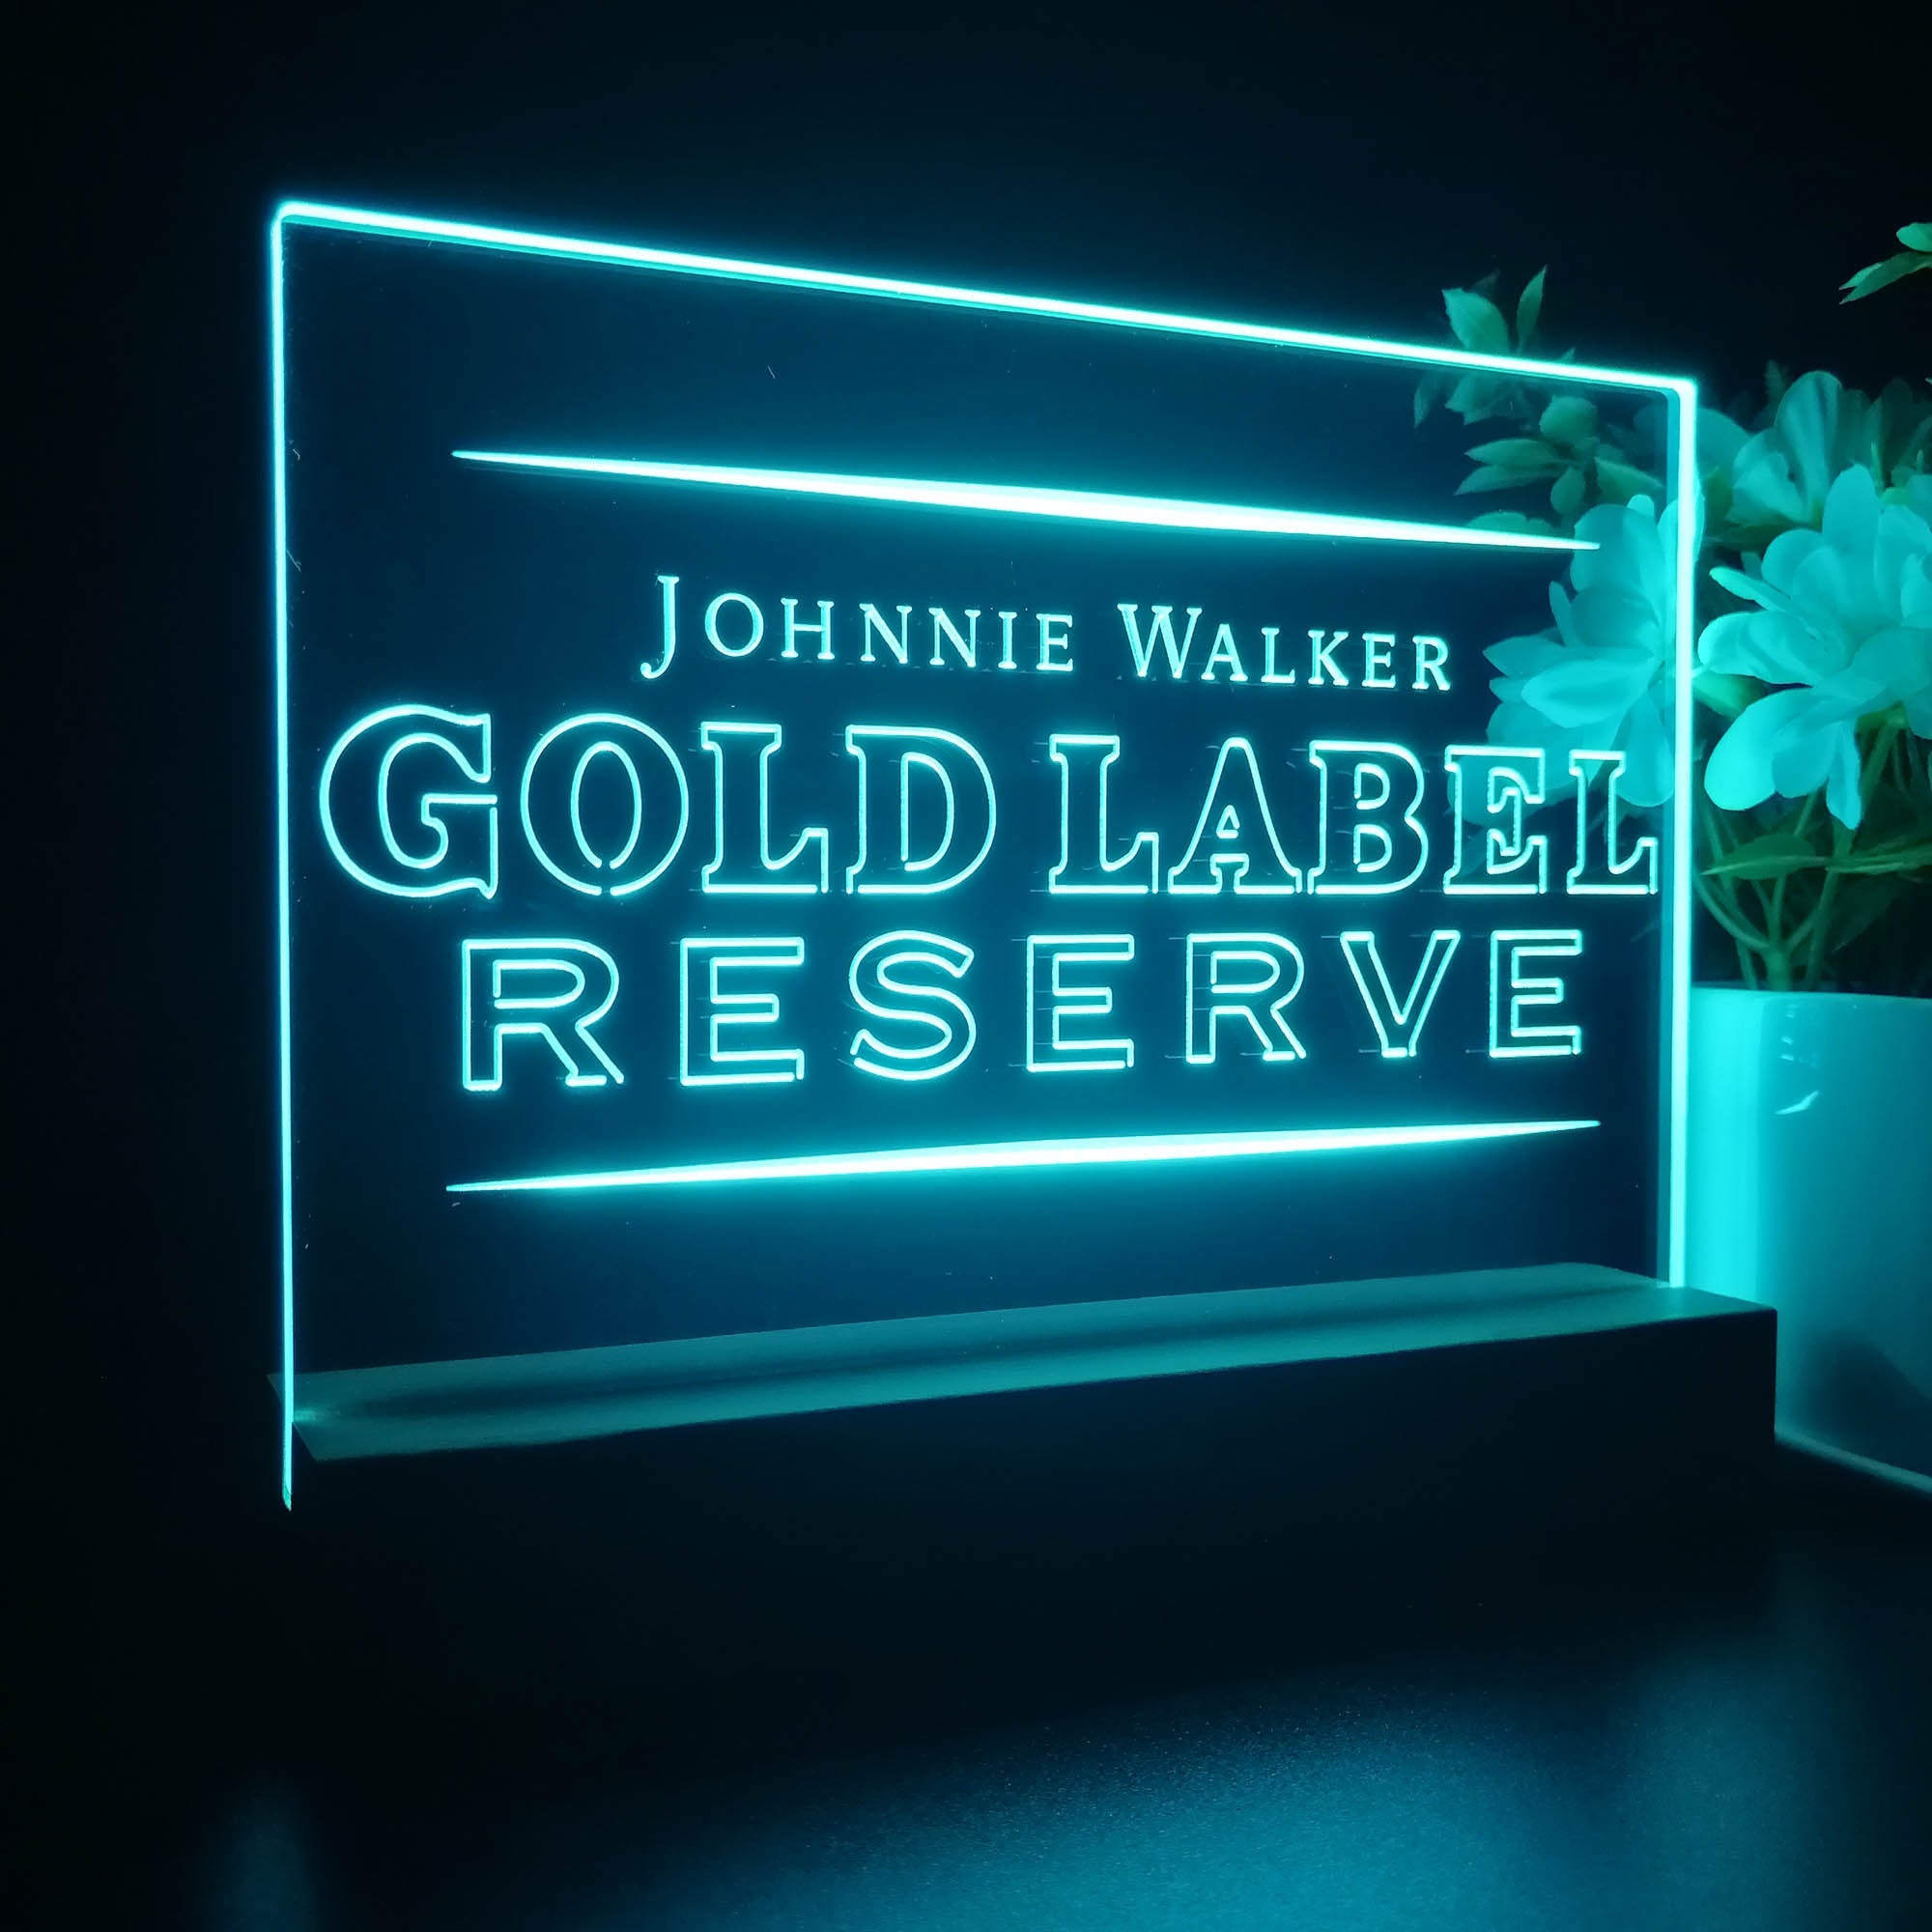 Johnnie Walker Gold Label Reserve Neon Sign Pub Bar Decor Lamp